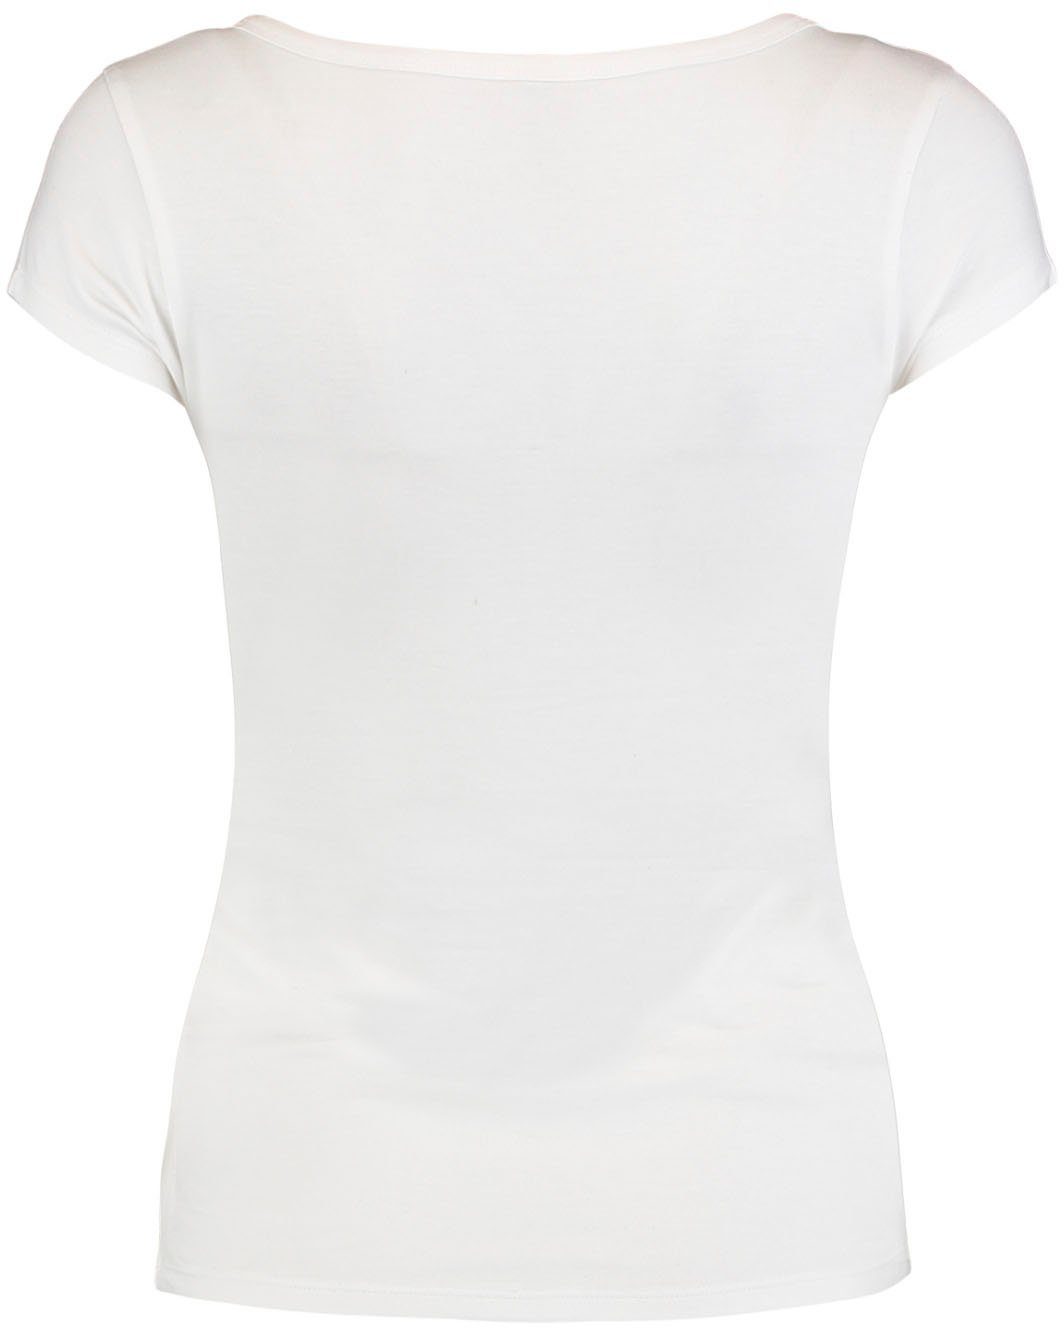 HaILY’S T-Shirt Henna white TP